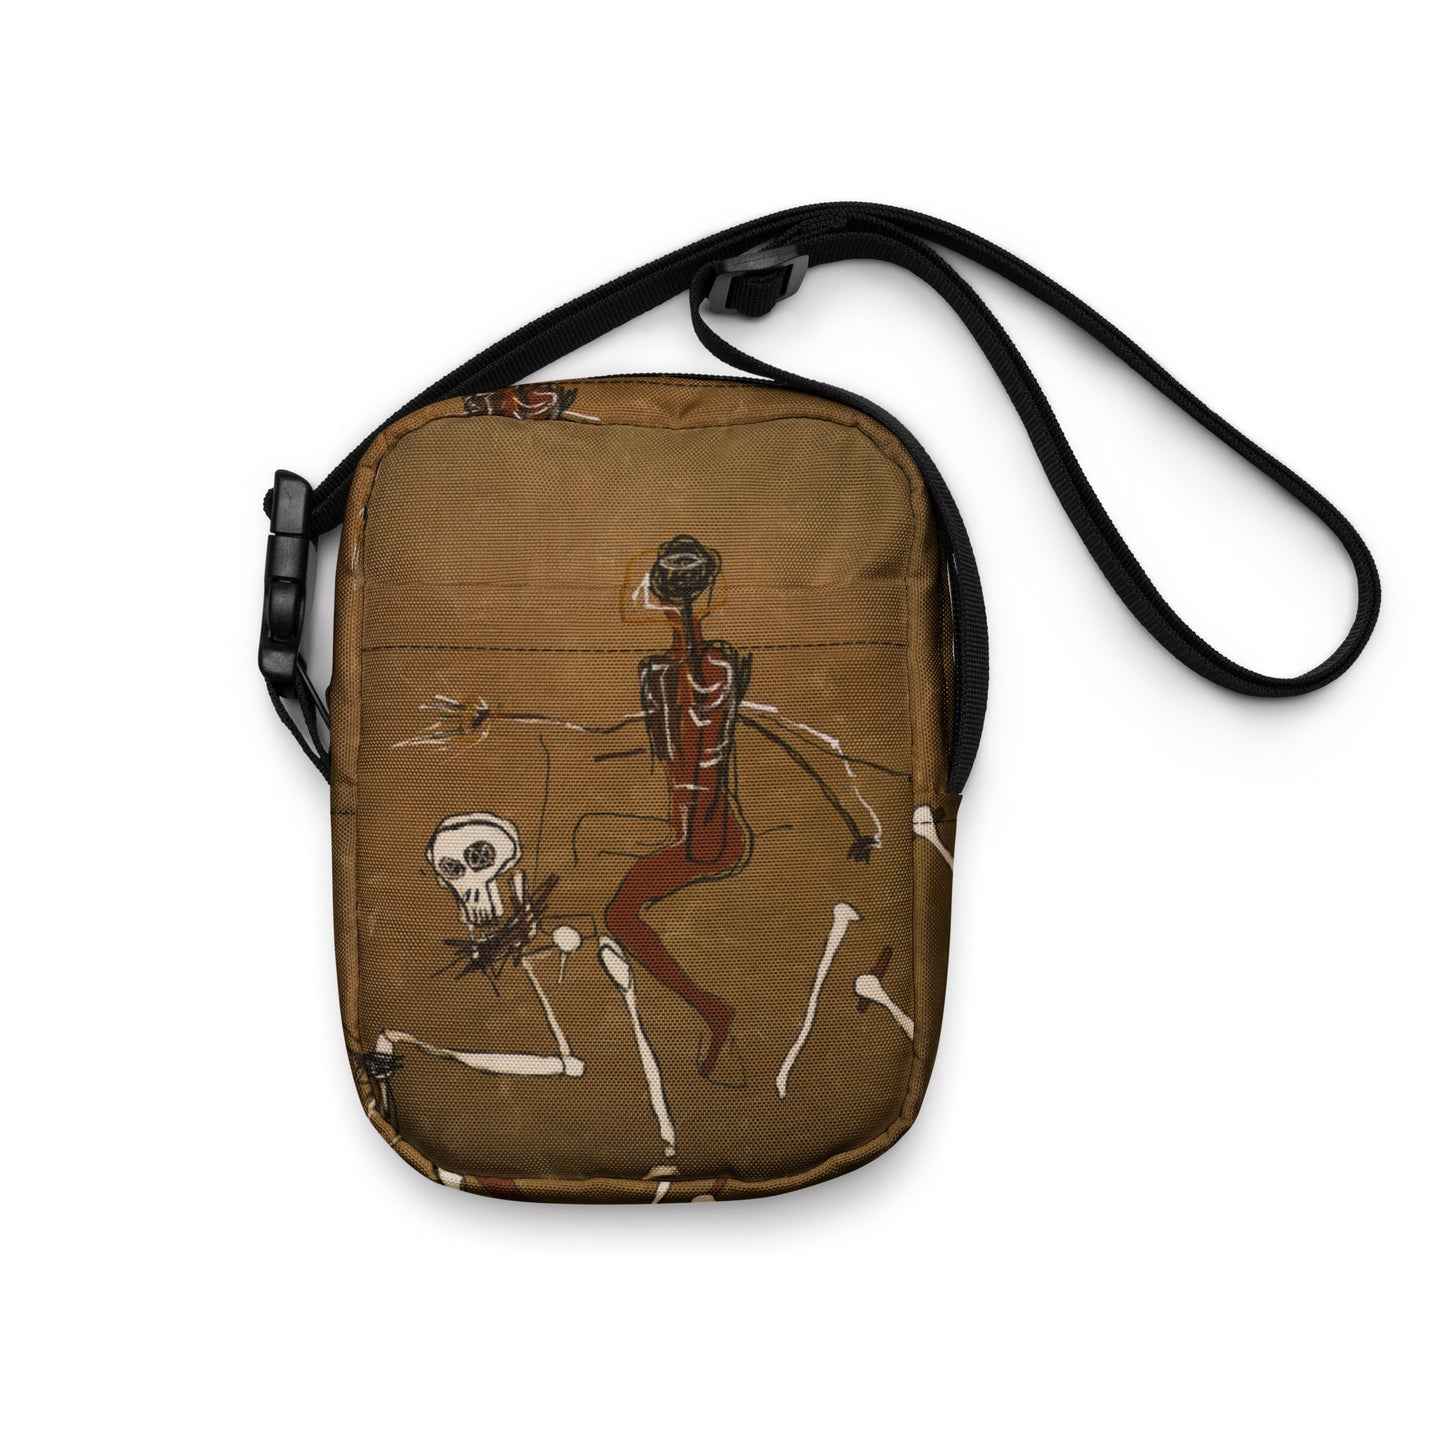 Jean-Michel Basquiat "Riding With Death" Artwork Bag